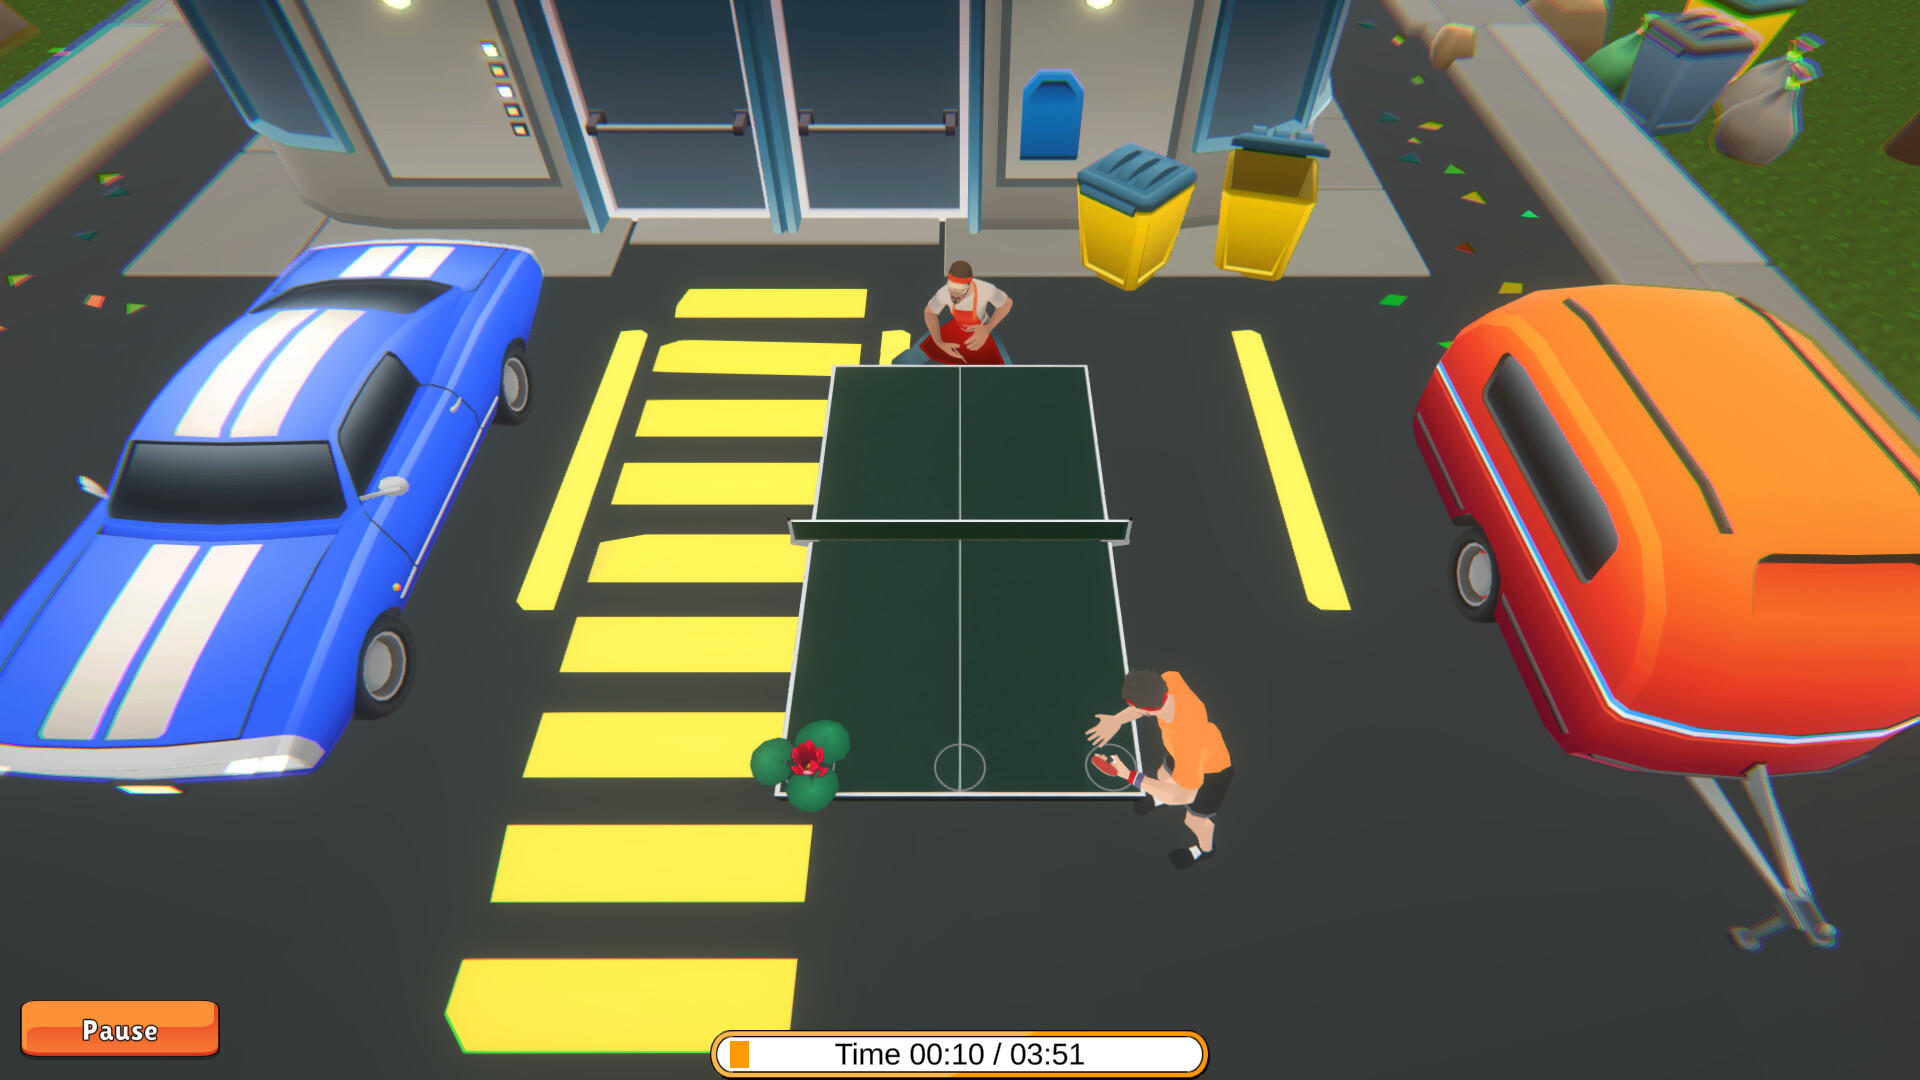 Screenshot of Timo Boll Beats Table Tennis